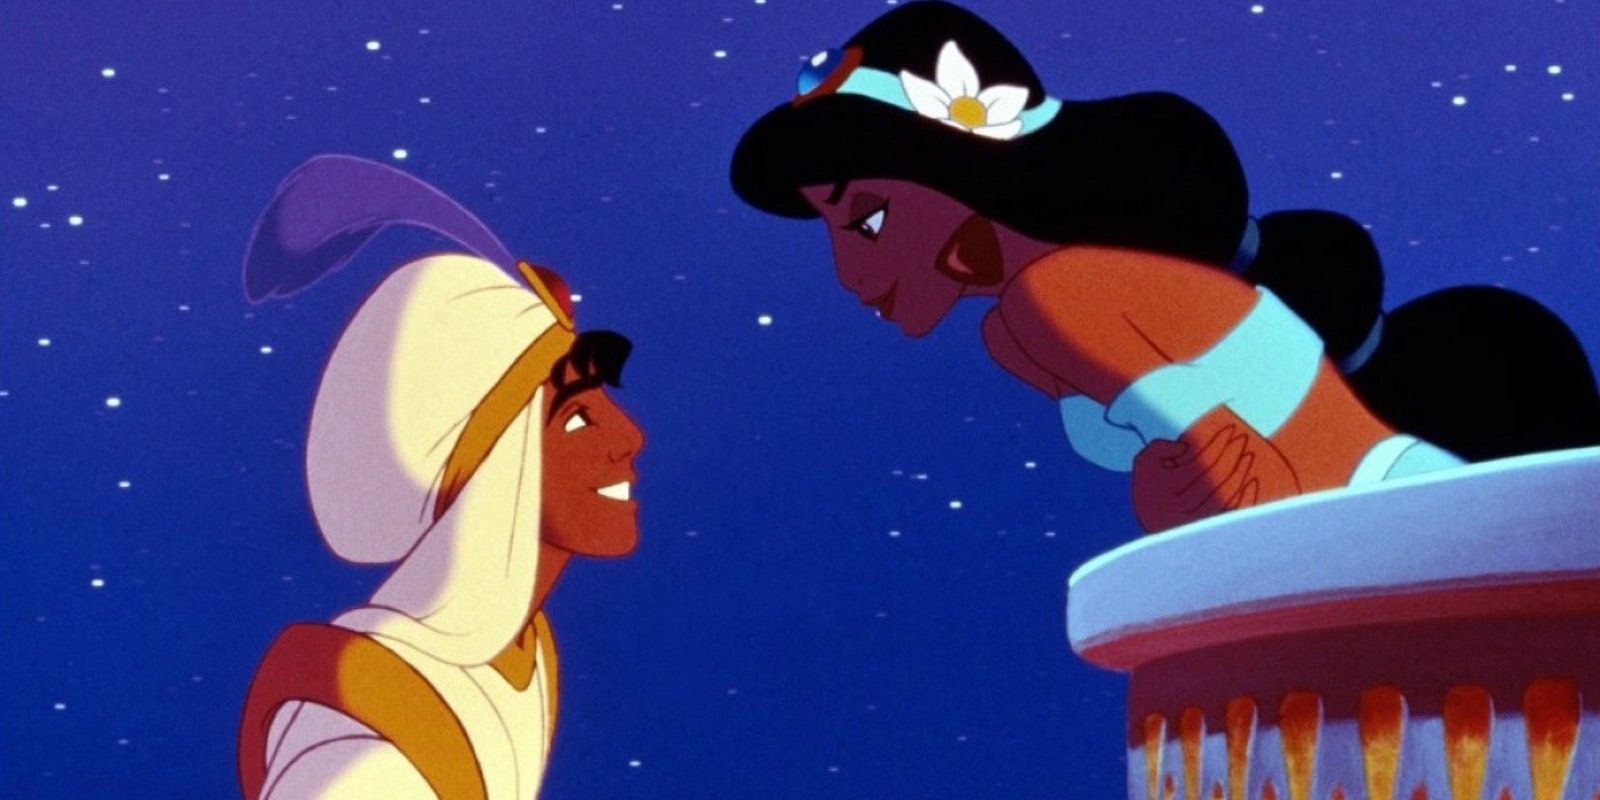 Aladdin inviting Jasmine on a magic carpet ride